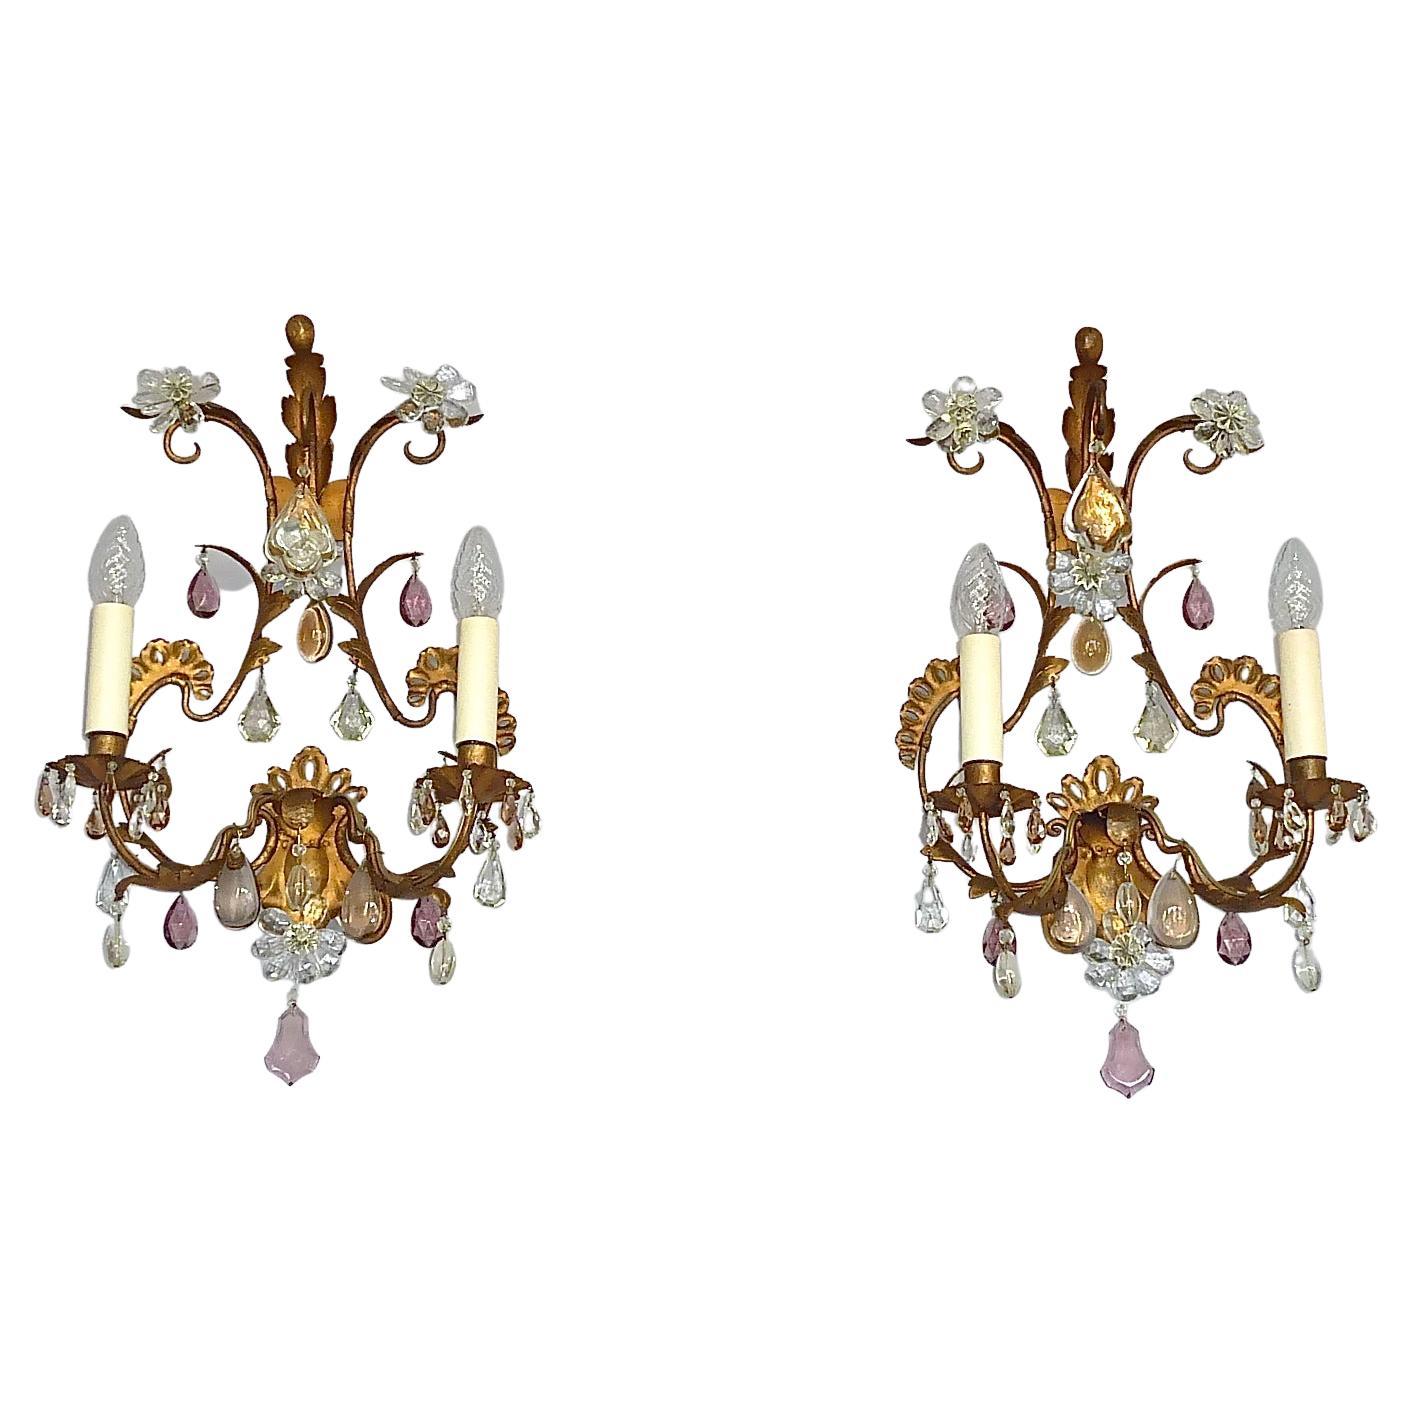 Großes Paar vergoldet Maison Baguès Stil Blume Blatt Wandleuchter Facettiert Kristallglas